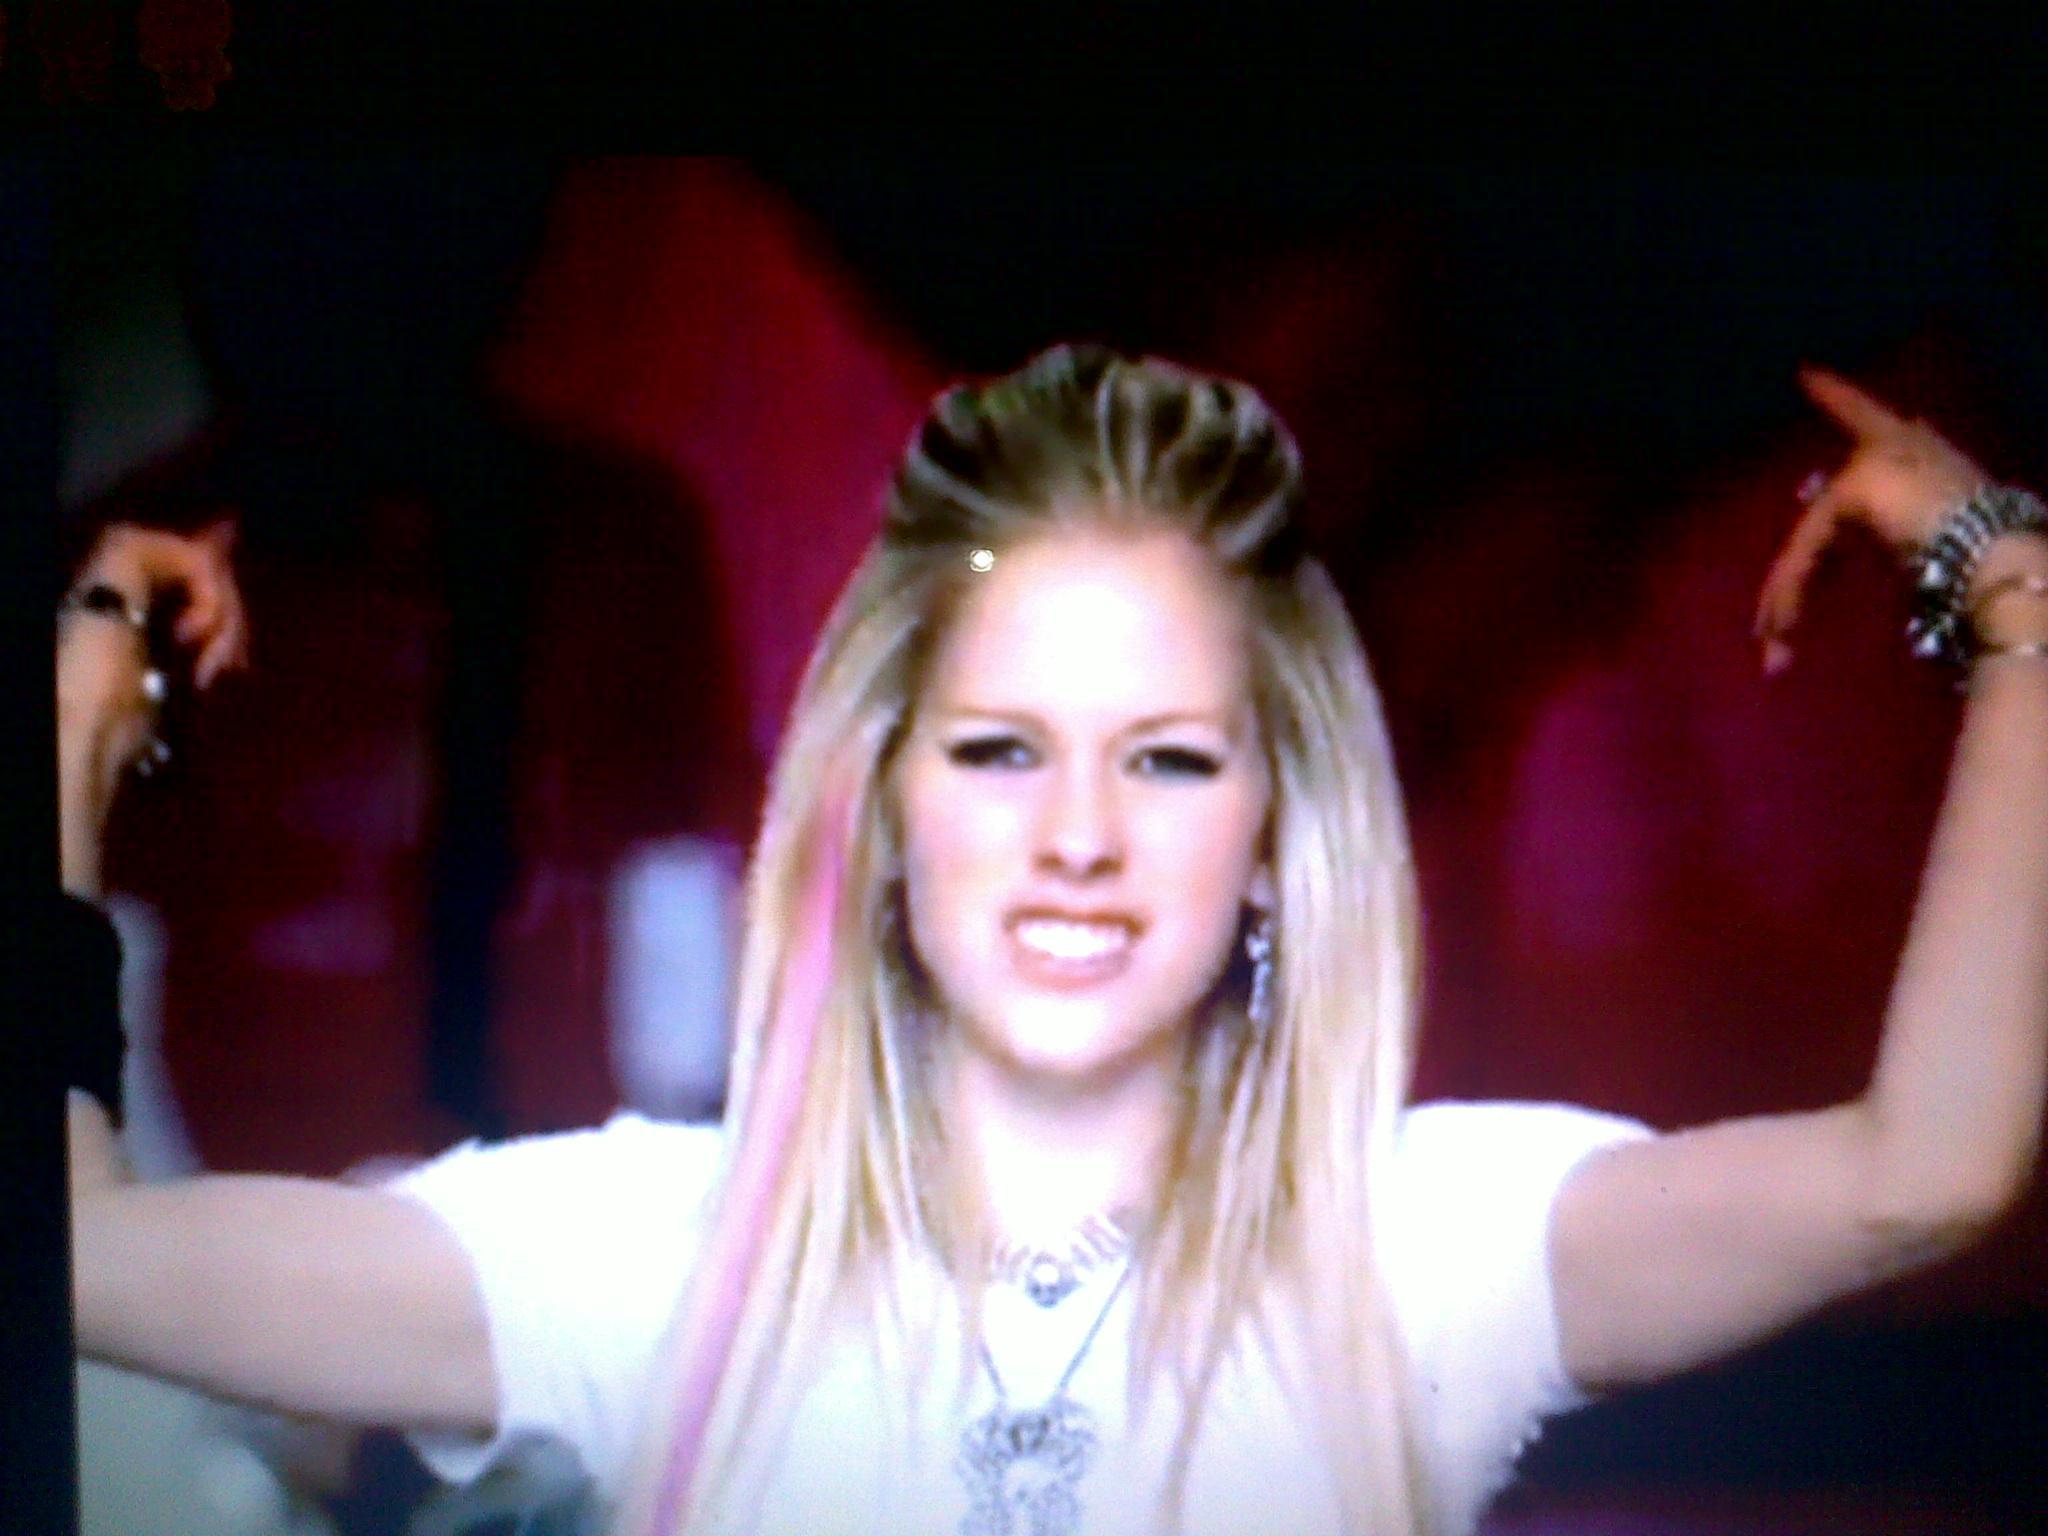 Music video - Girlfriend - Avril Lavigne Image (16184148) - Fanpop